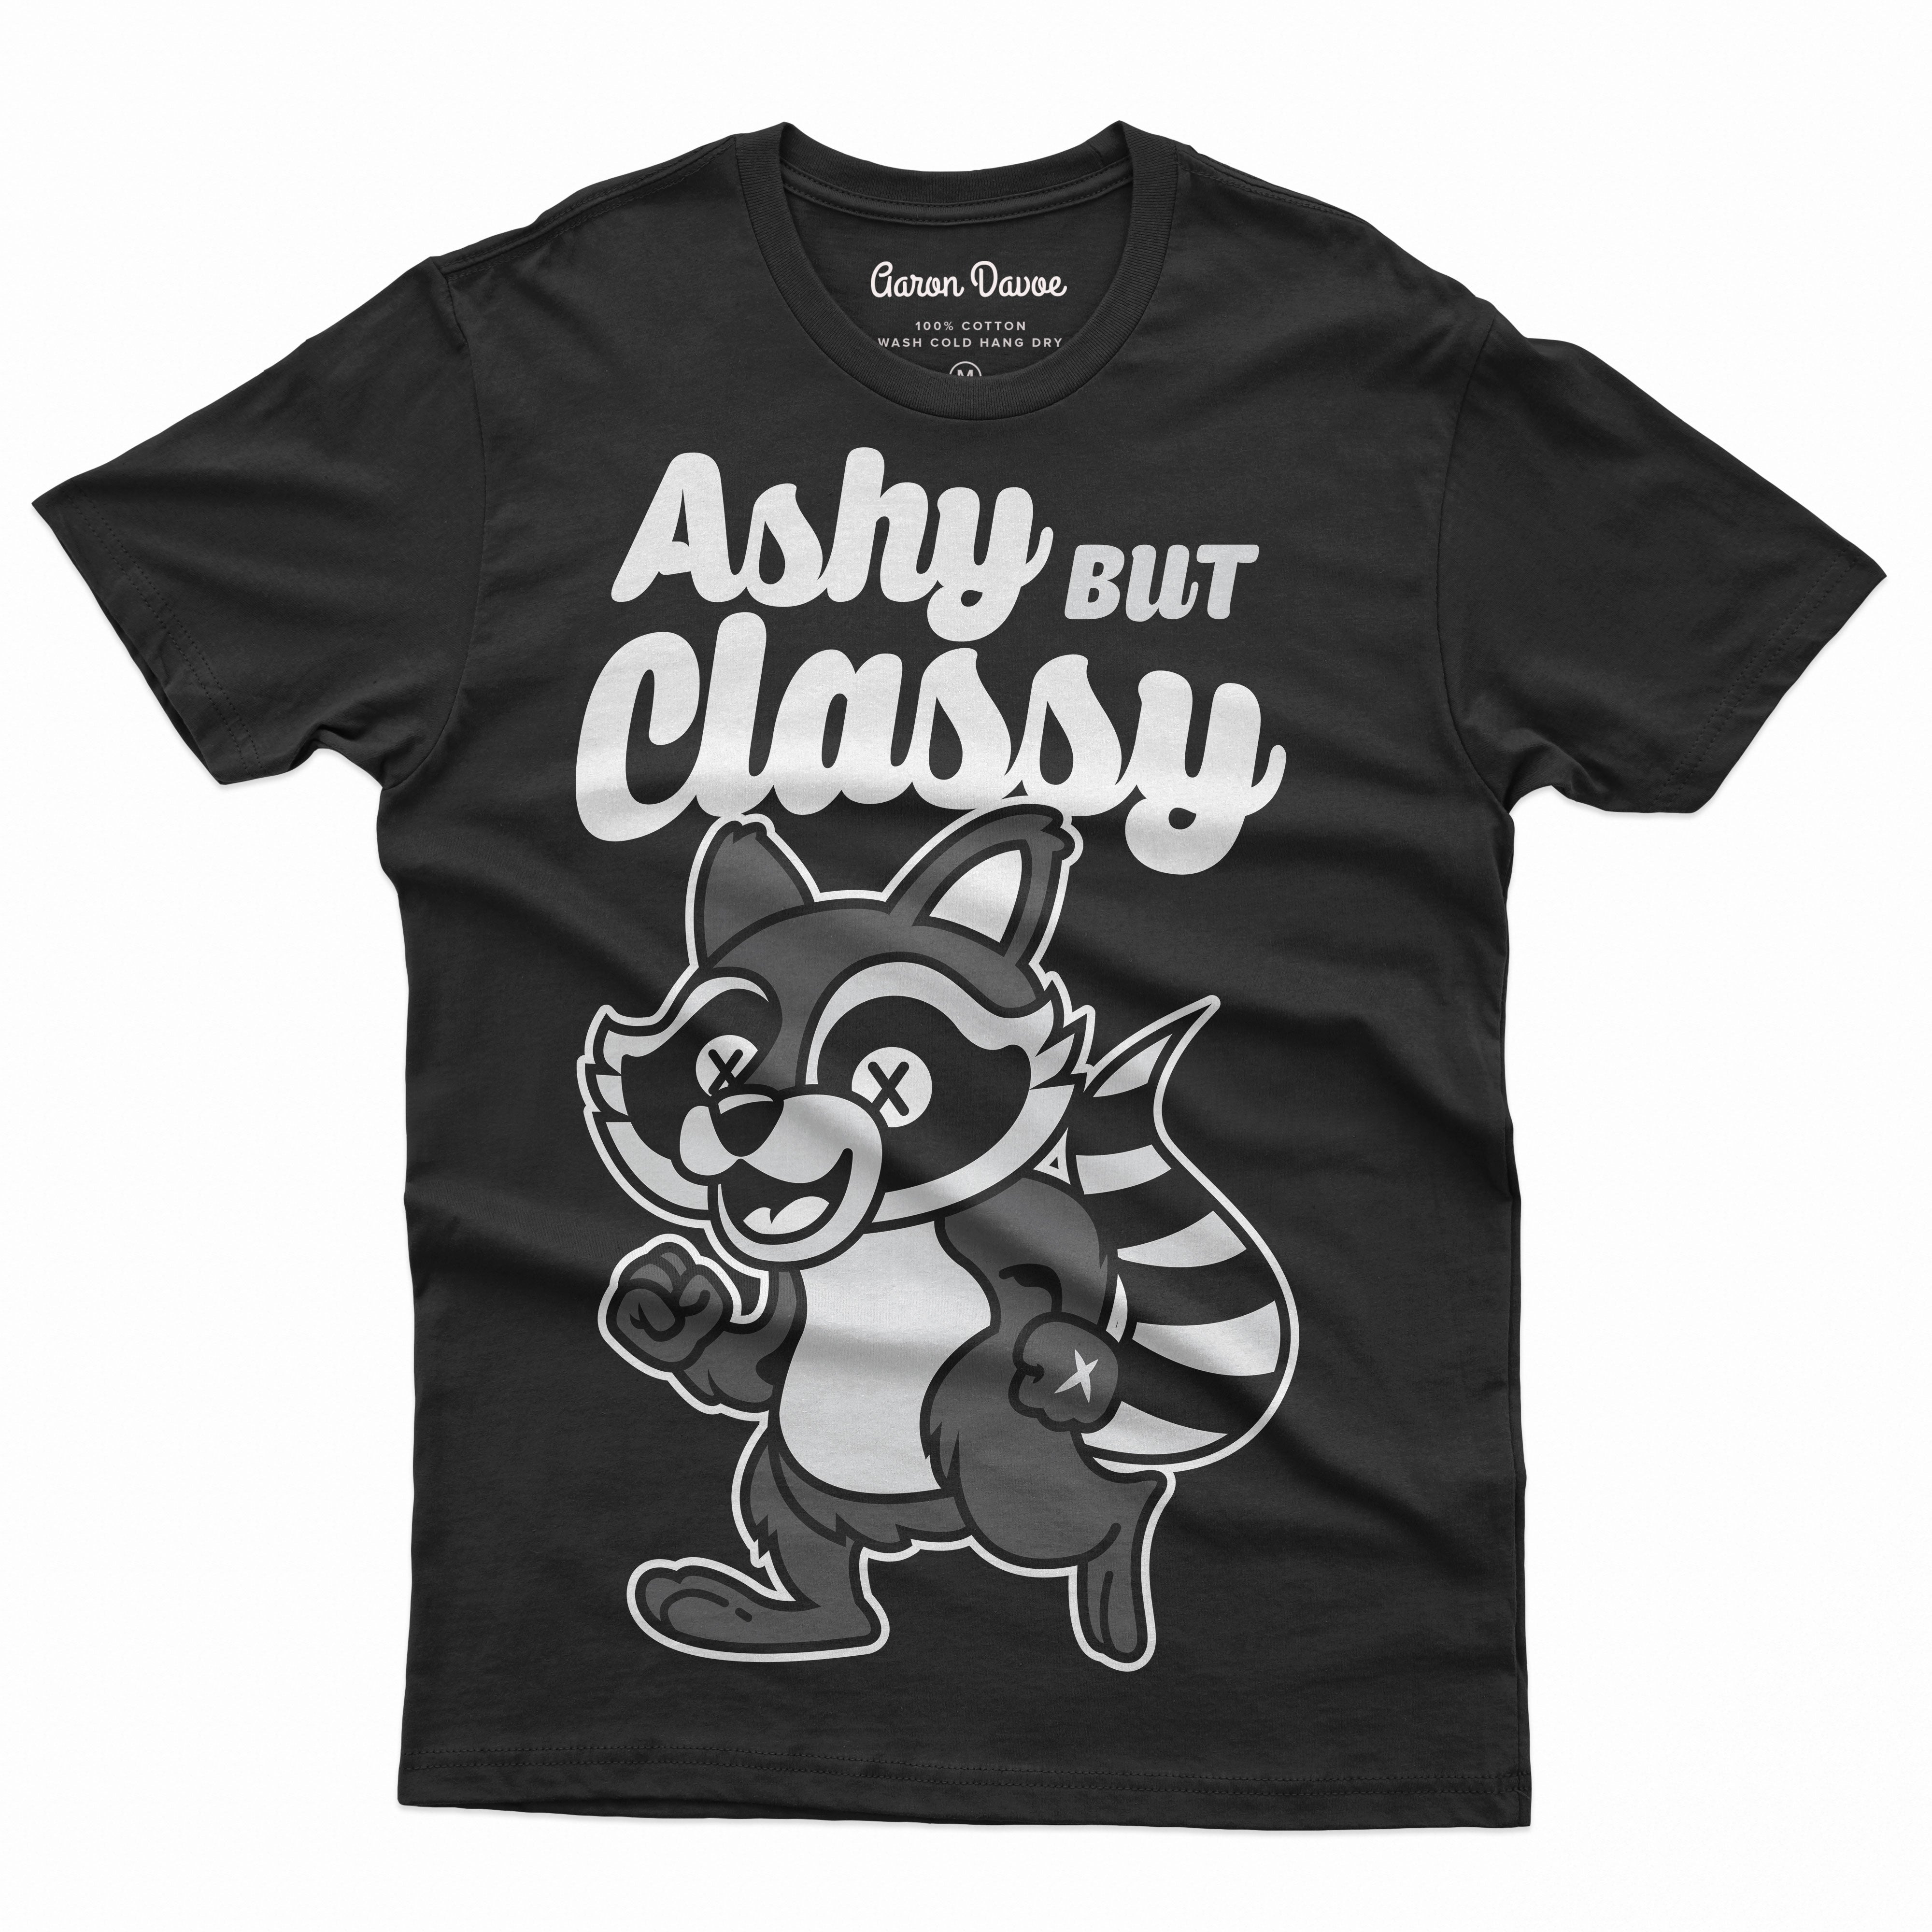 Ashy But Classy freeshipping - Aarondavoe